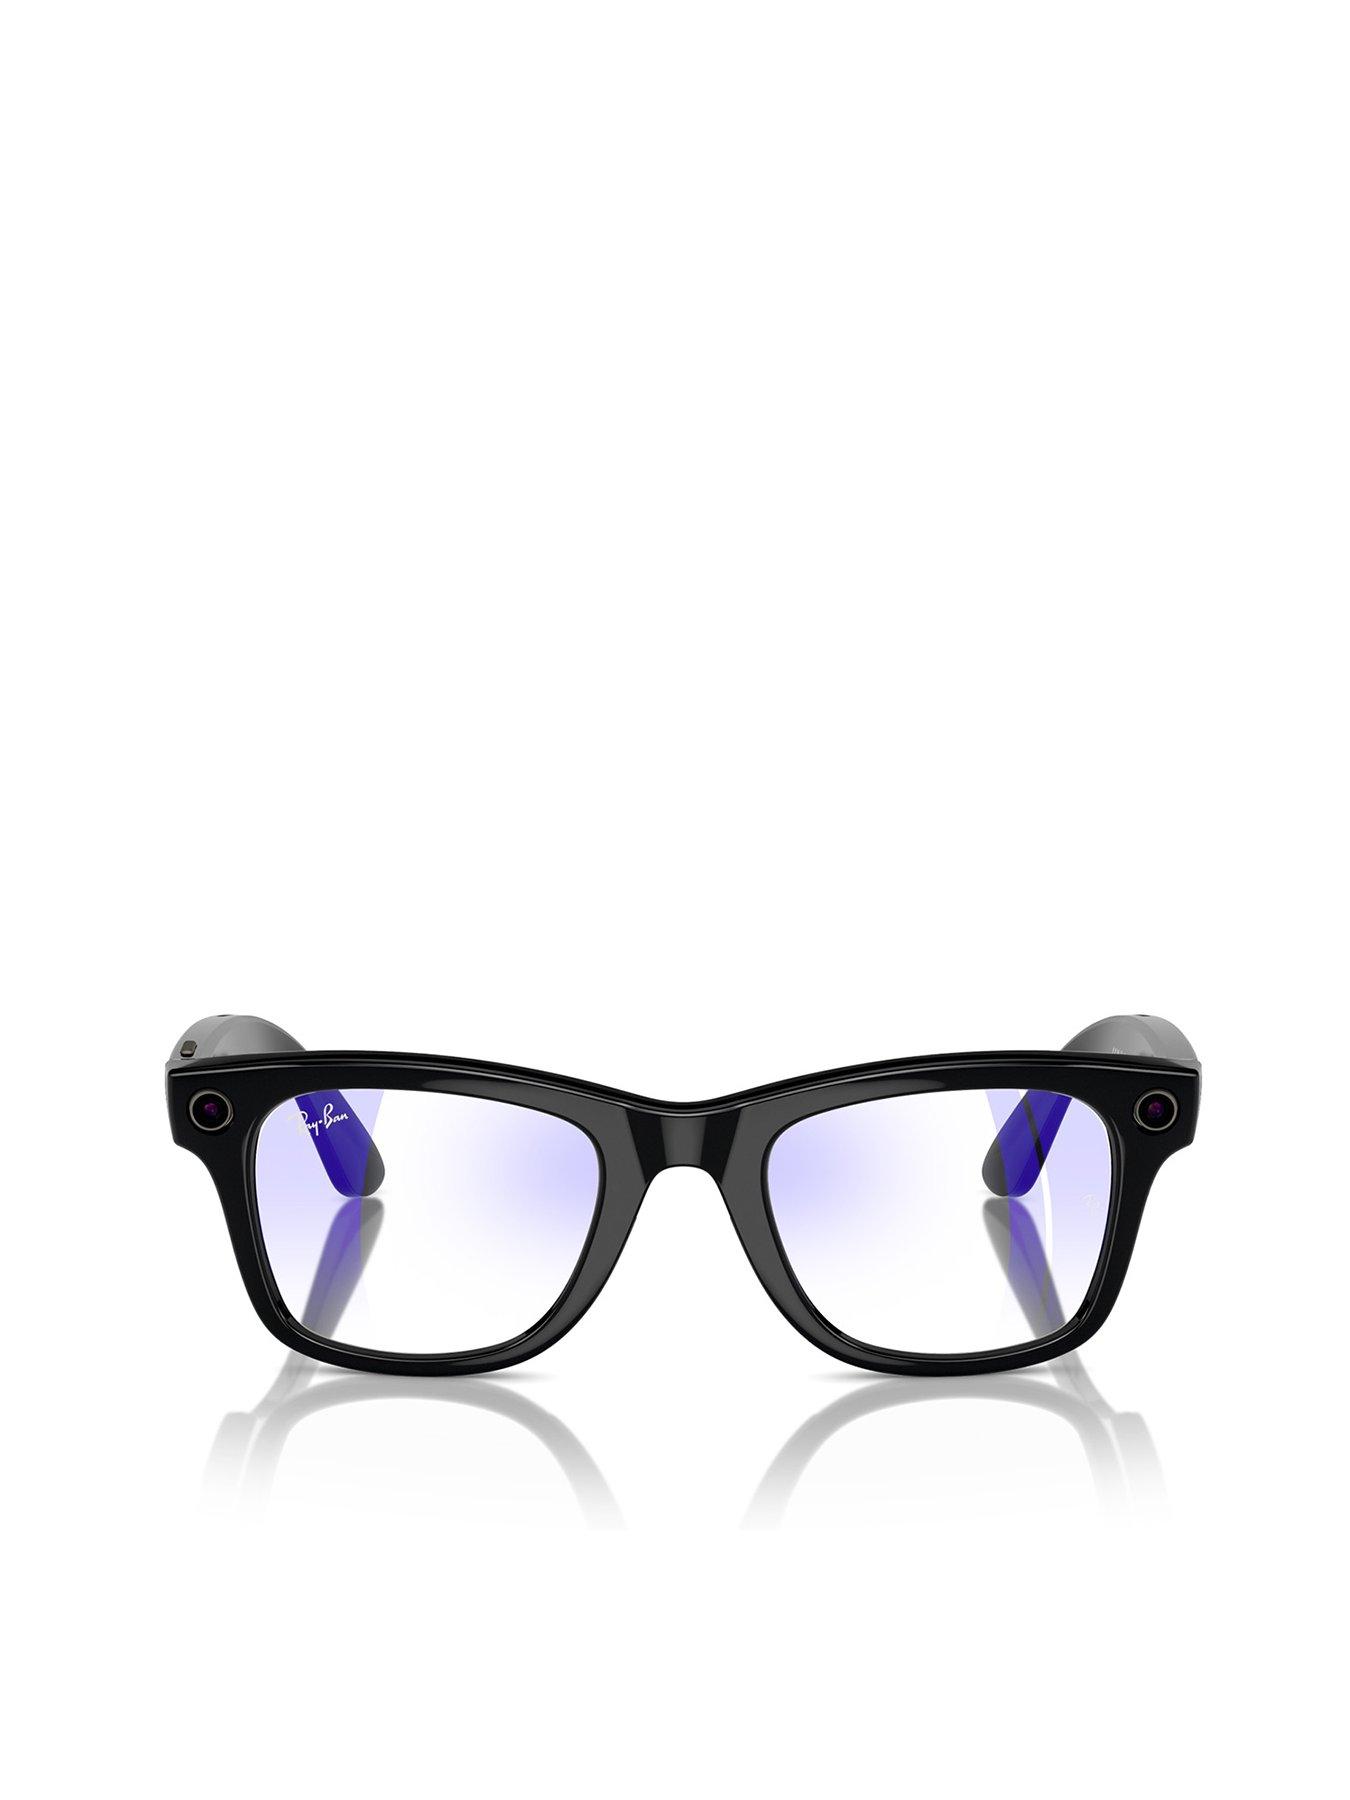 Rayban - Meta Ray-Ban, Meta Wayfarer (Standard) Smart Glasses - Shiny Black,  Clear